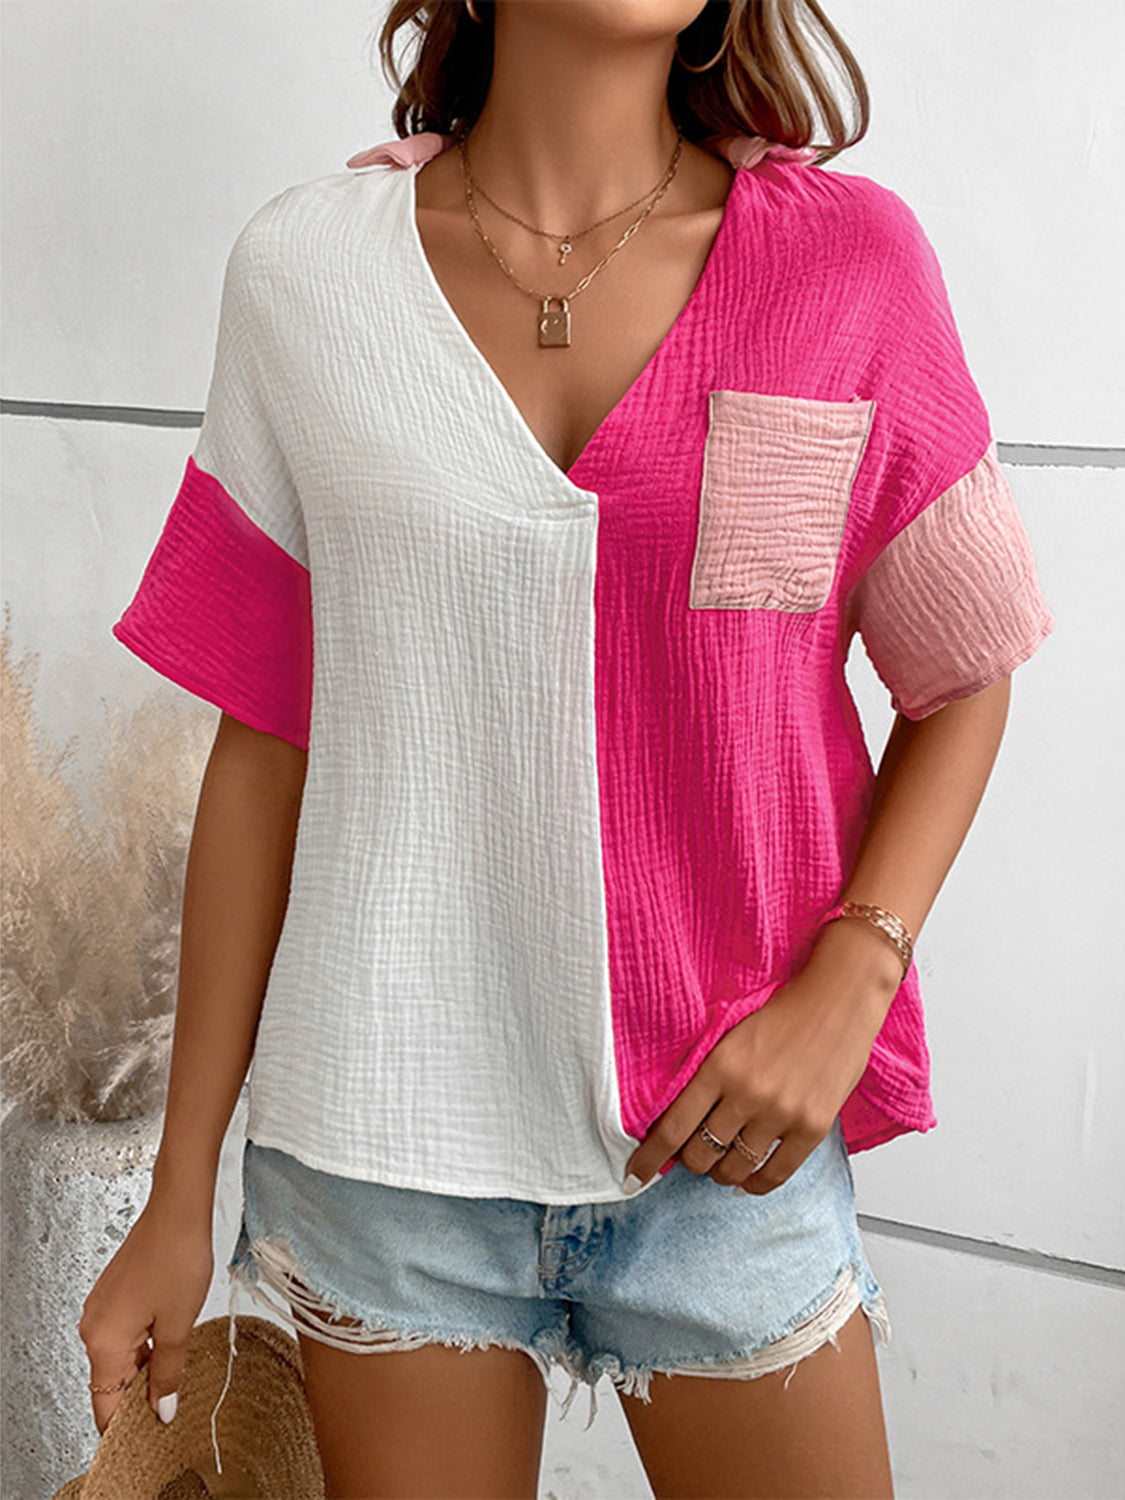 TEEK - Hot Pink Johnny Collar Short Sleeve Blouse TOPS TEEK Trend S  